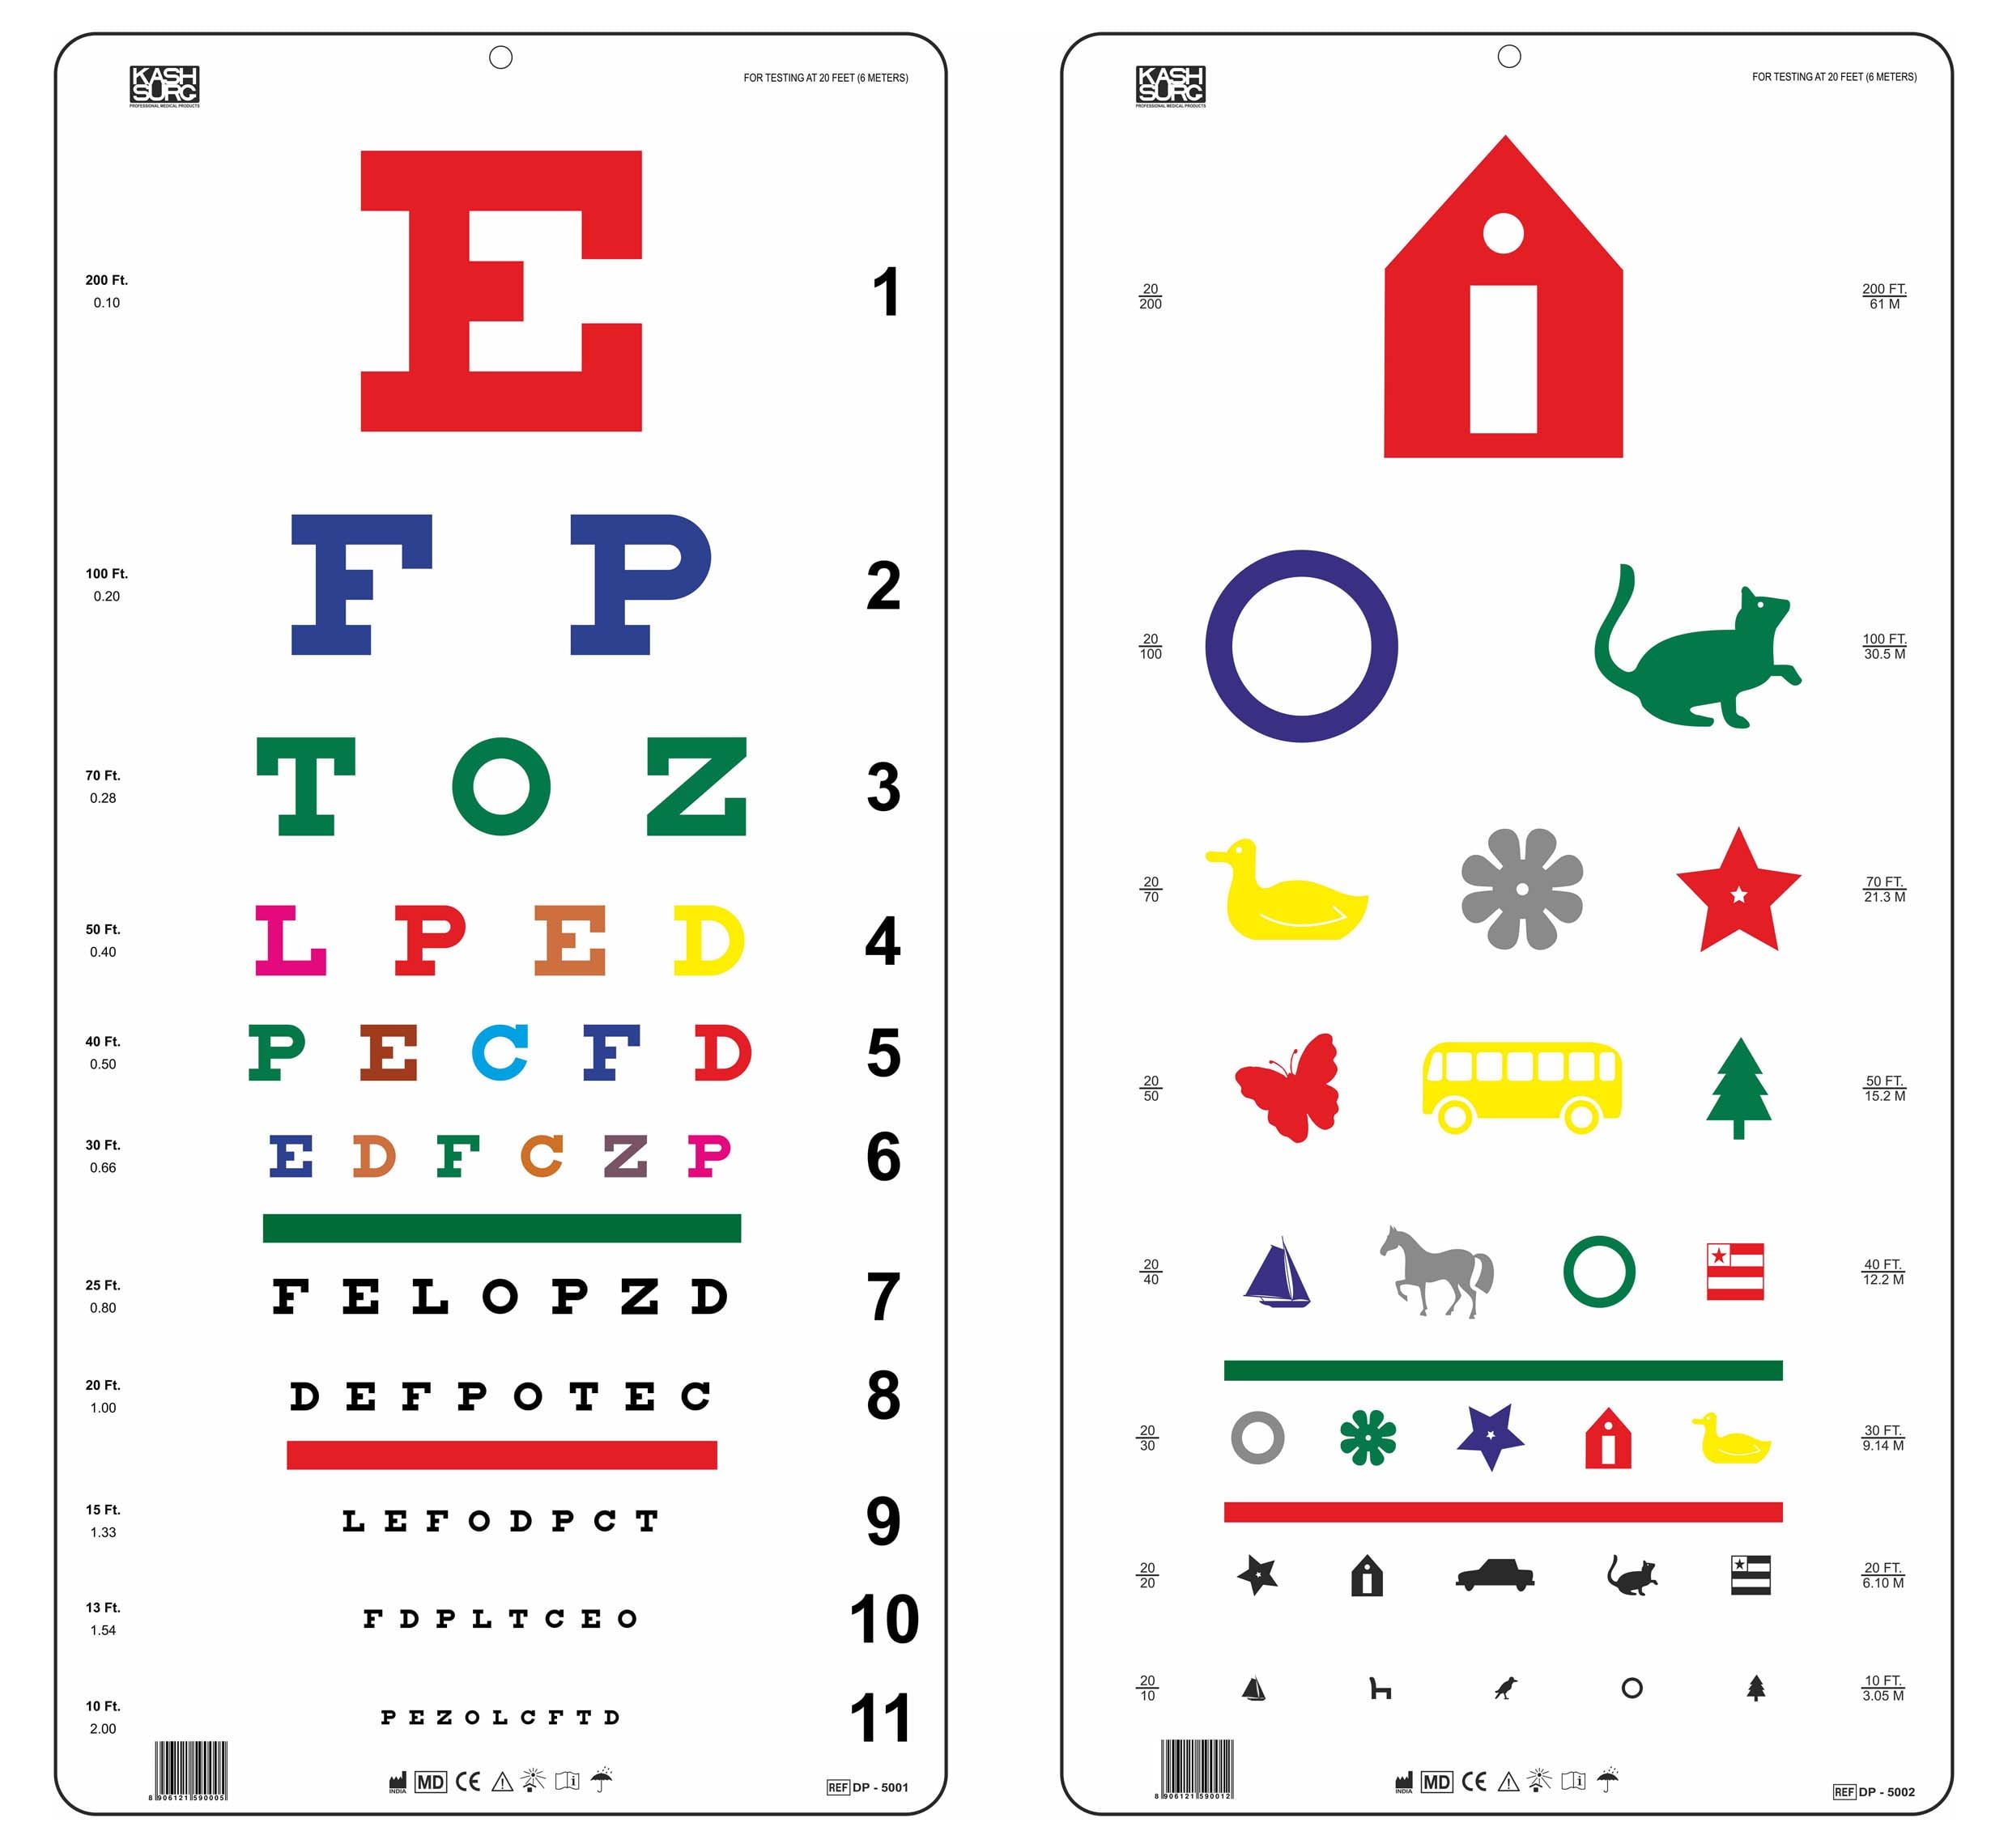 Snellen EFP & Kindergarten Color Distance Vision Eye Chart 20 Feet